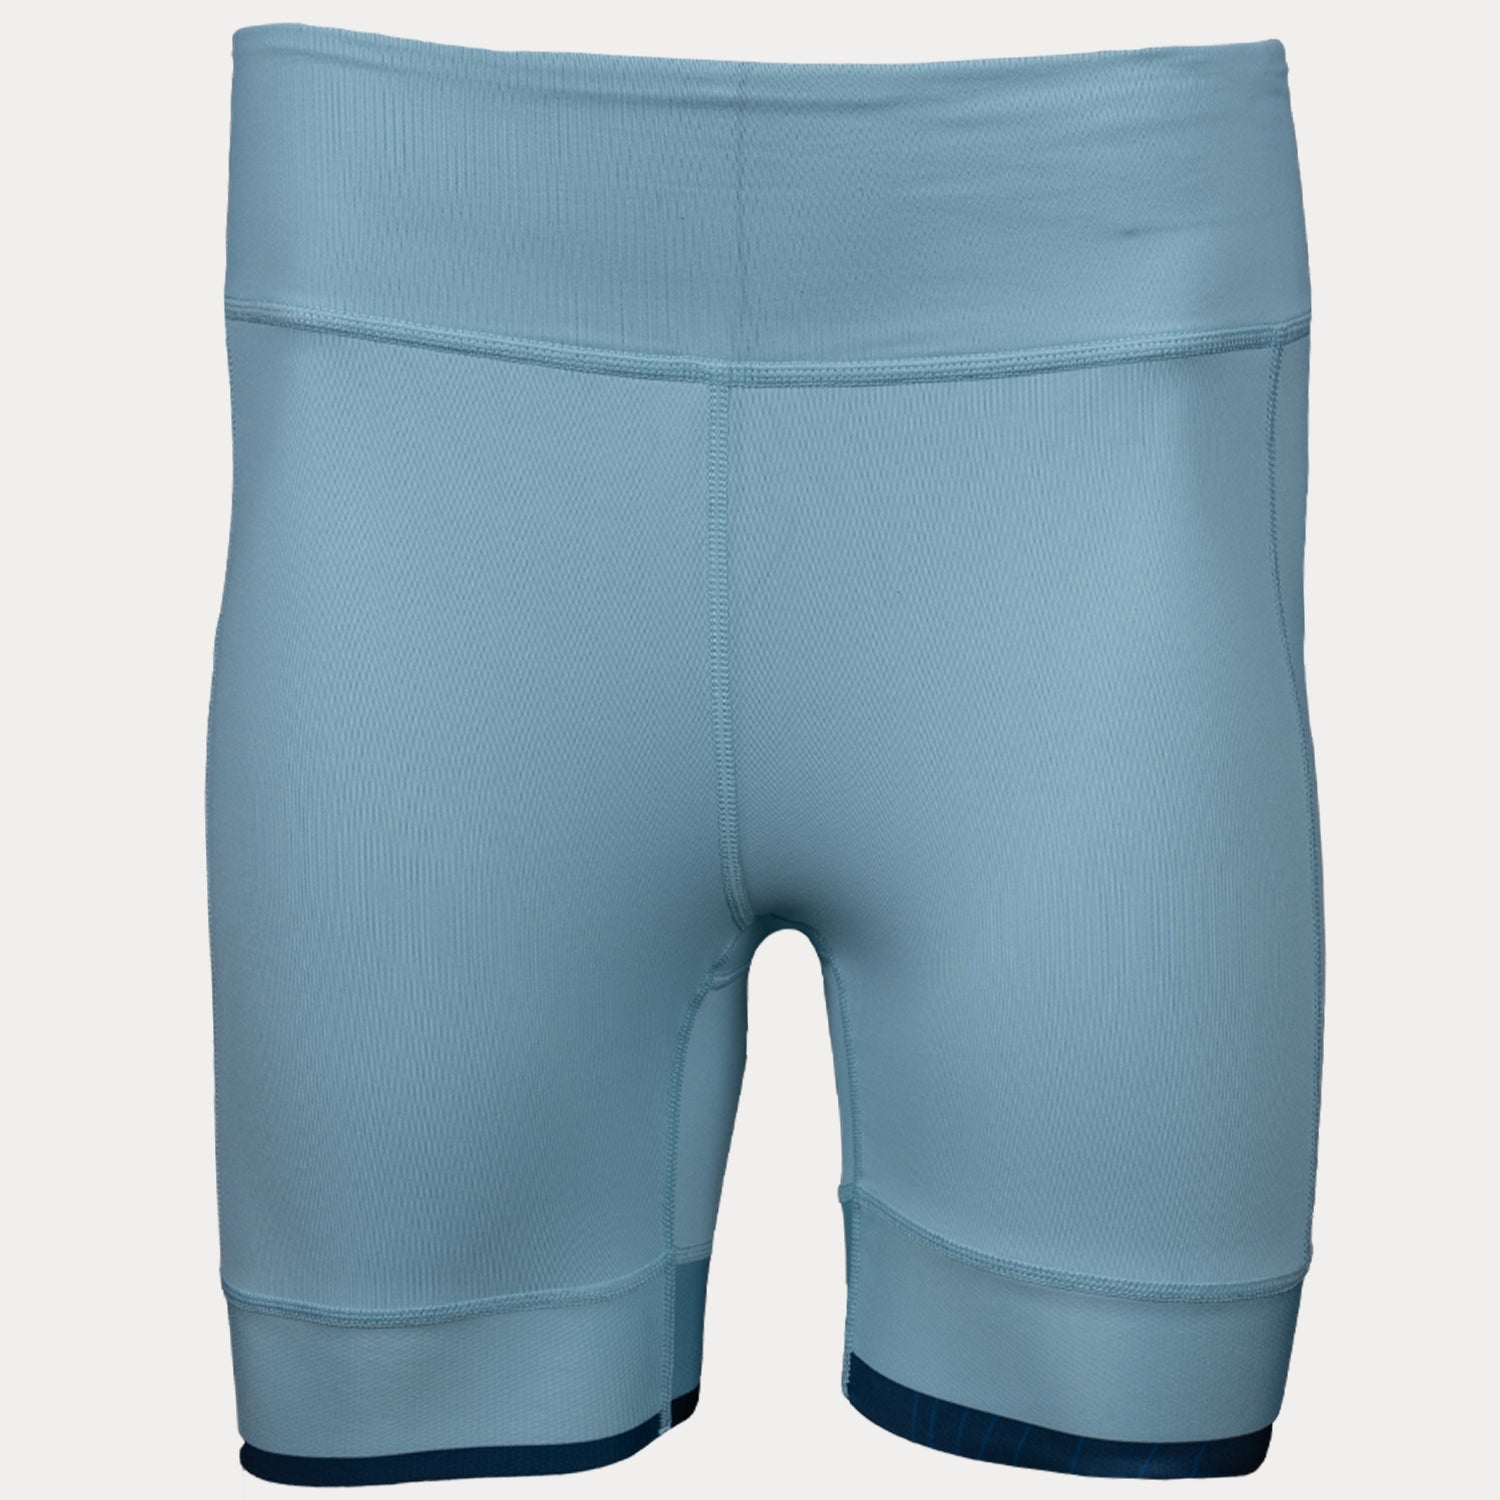 light blue Women's short with dark blue strip on bottom